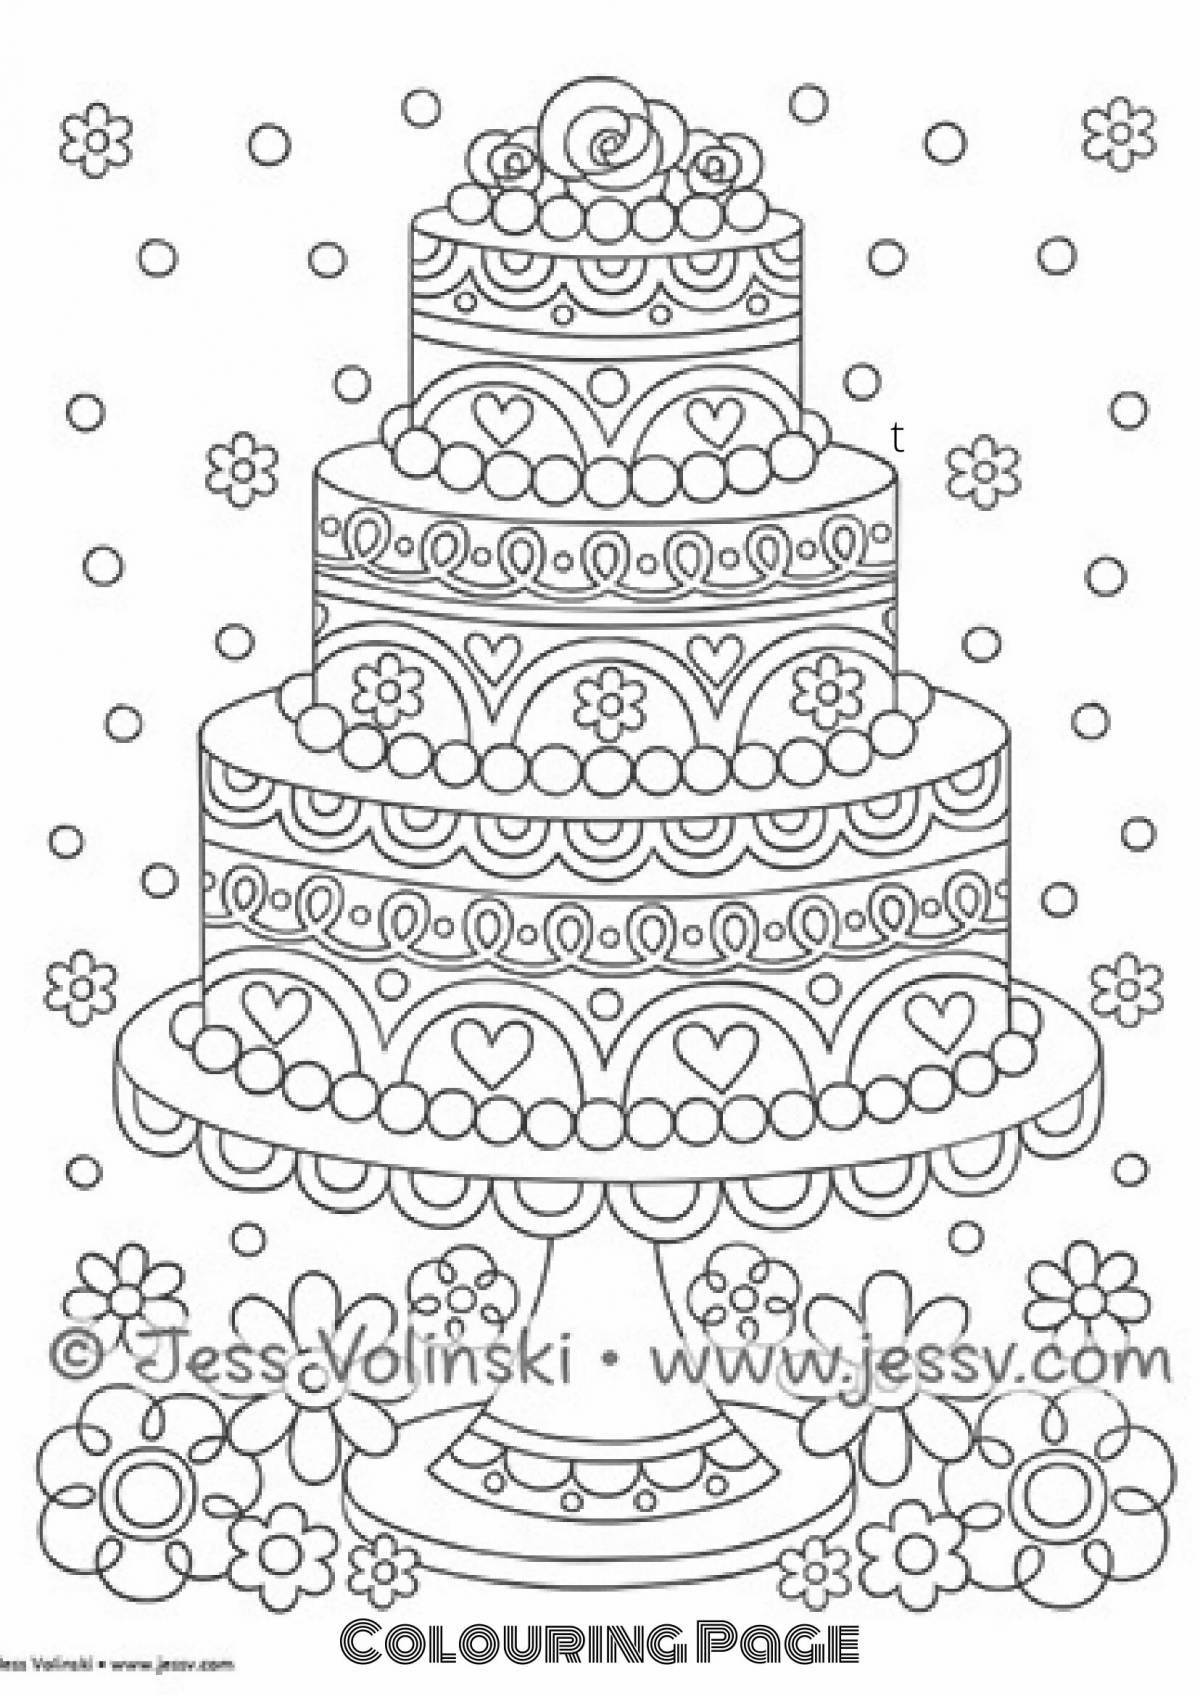 Impressive beautiful cake coloring page